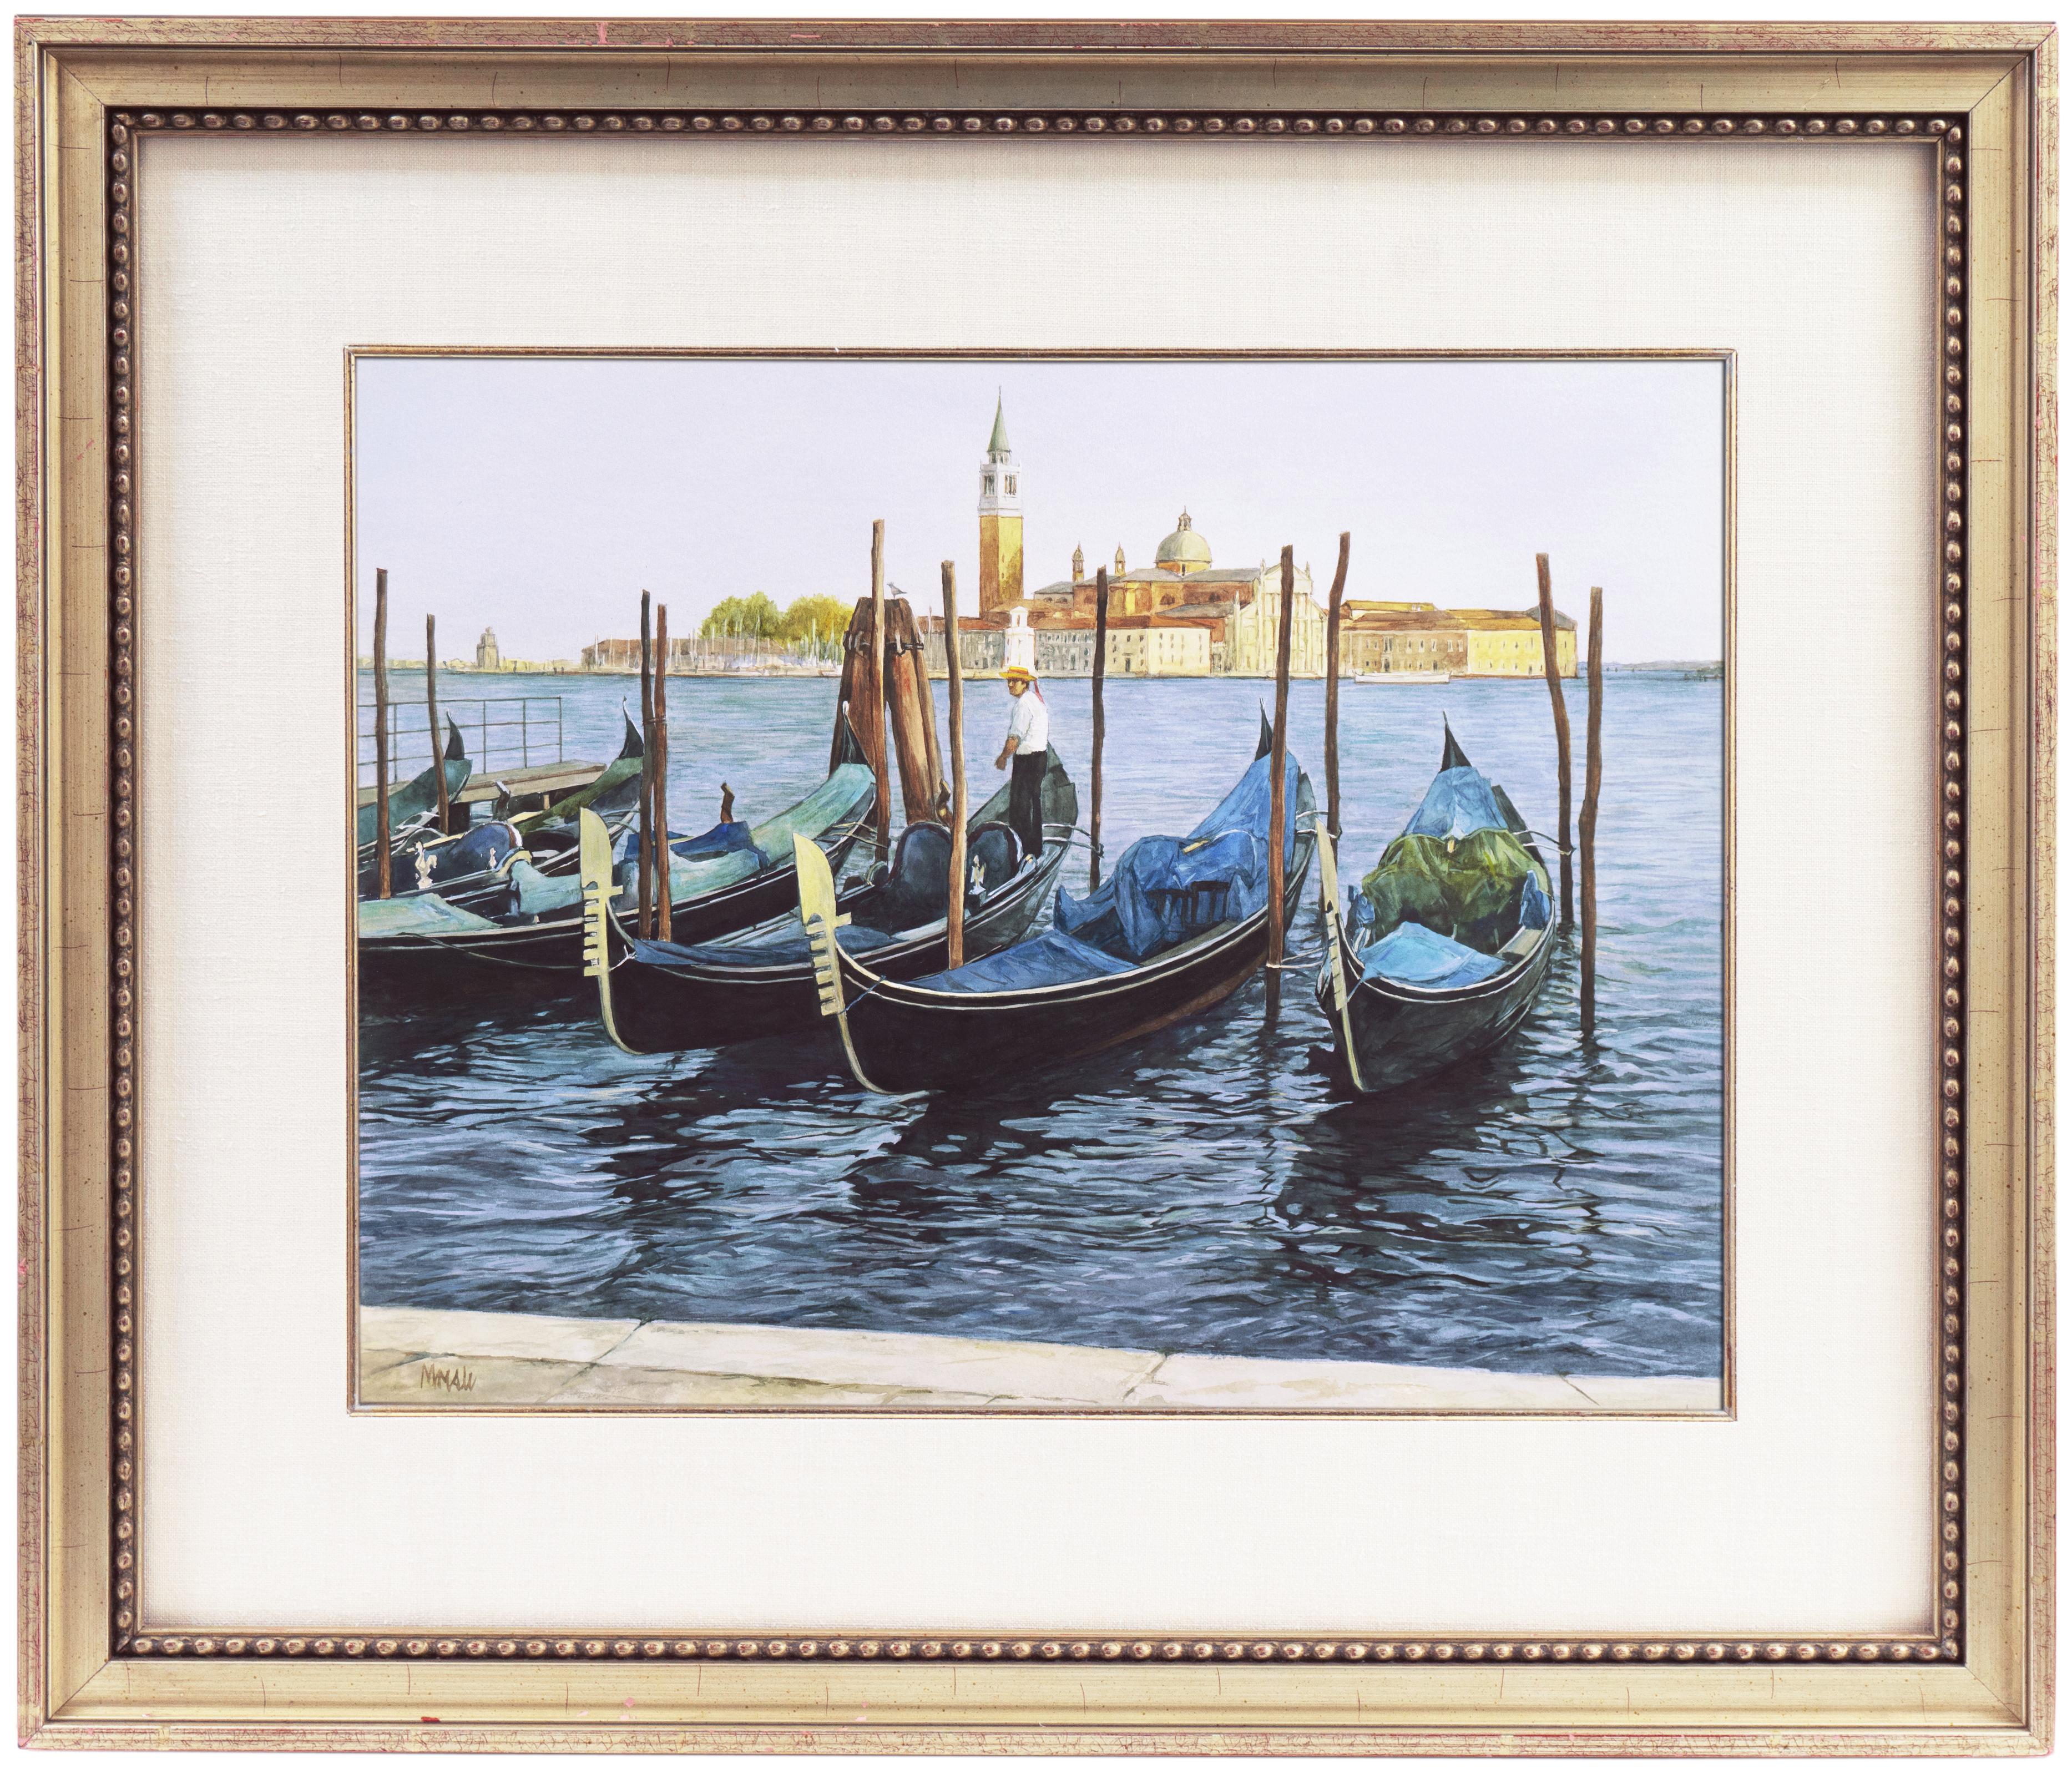 « Gondolas, San Giorgio Maggiore », Vedute vénitienne, Venise, école d'art de Ruskin - Art de Robert Moesle